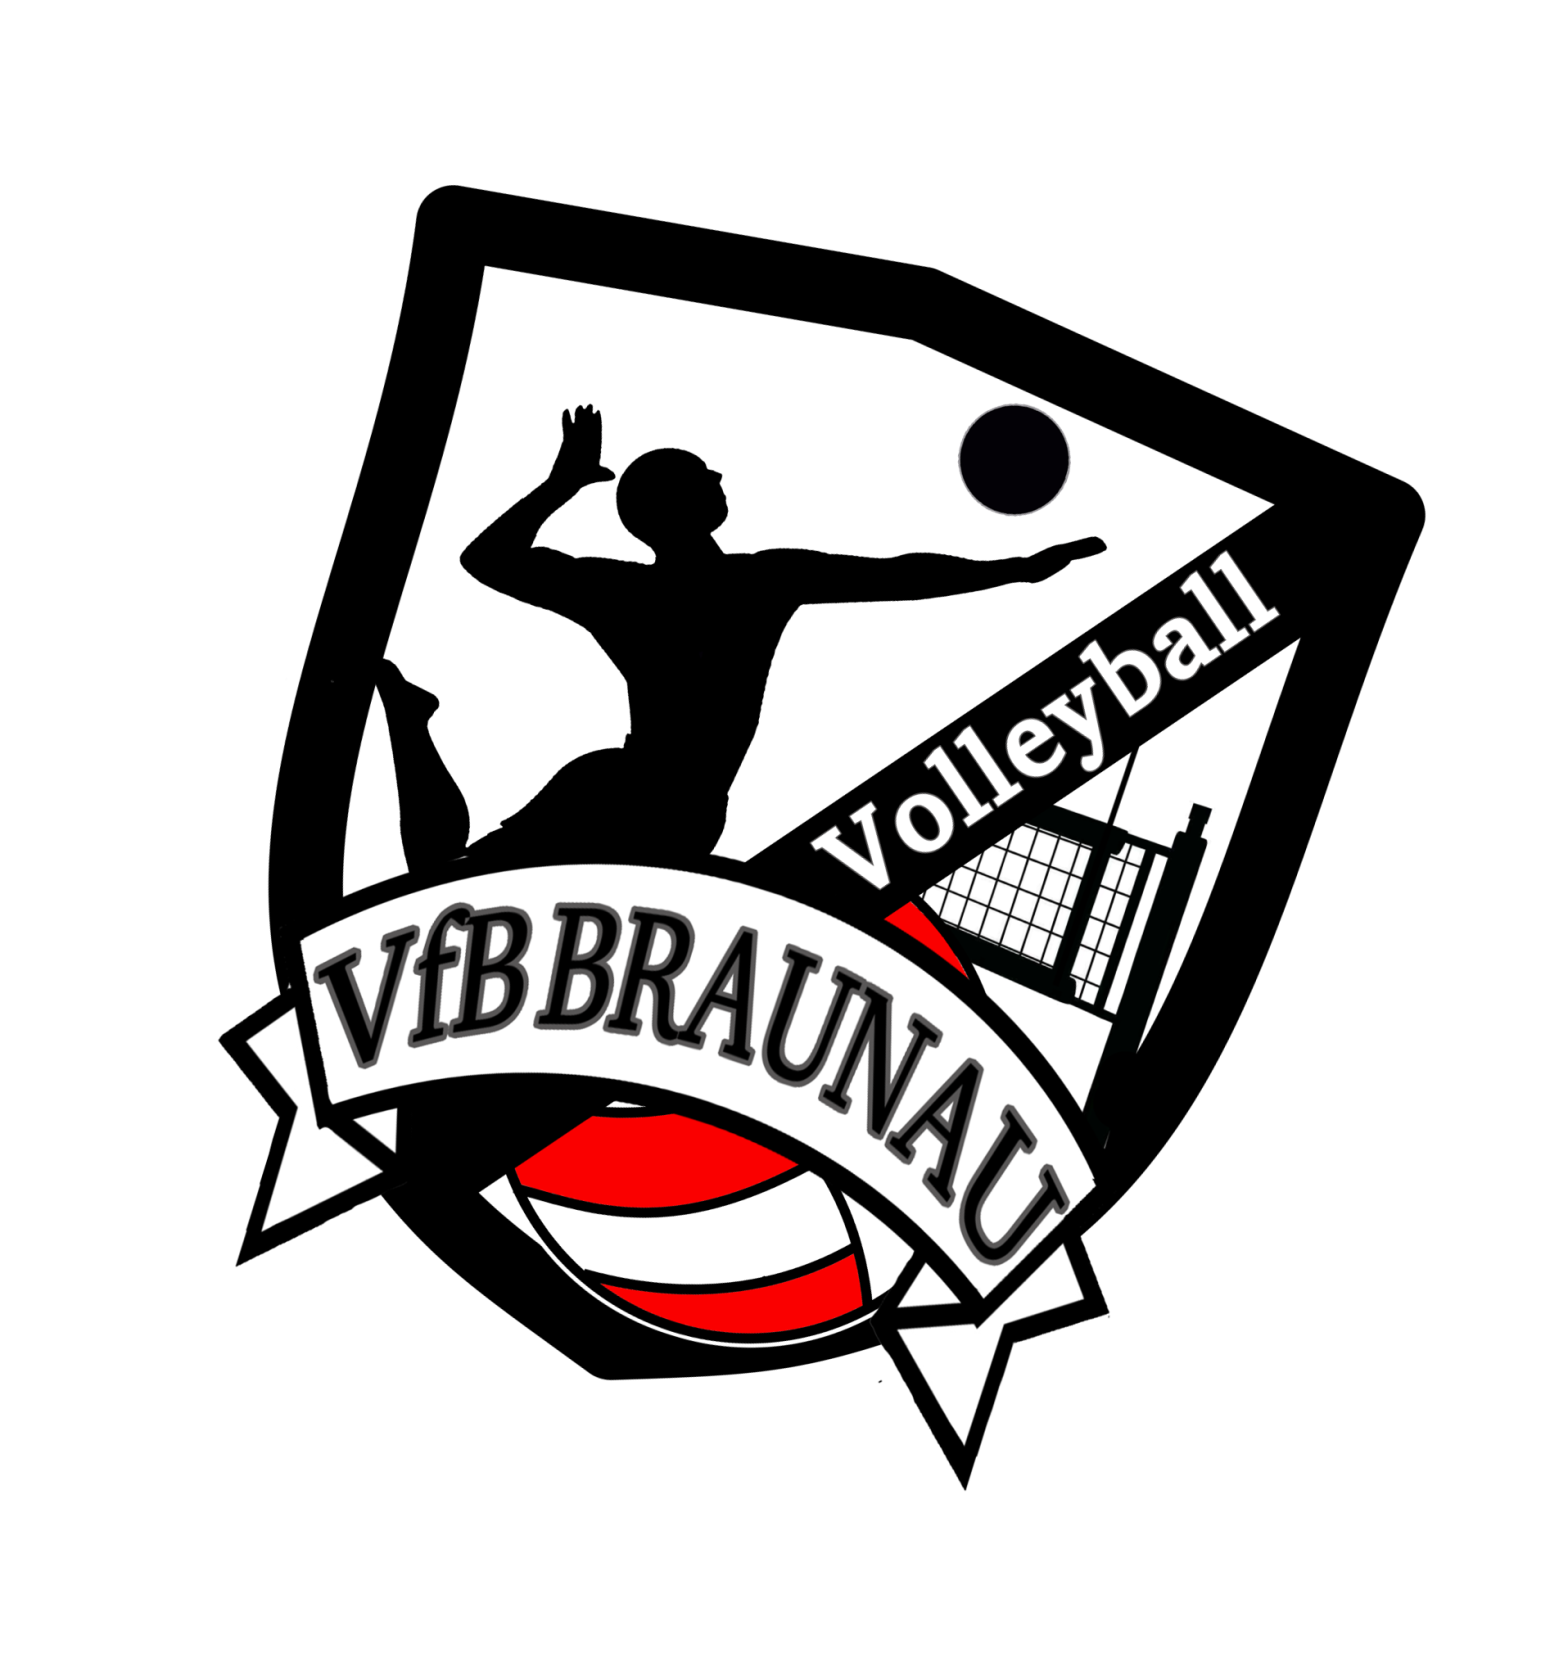 Volleyball - ASKÖ VfB Braunau